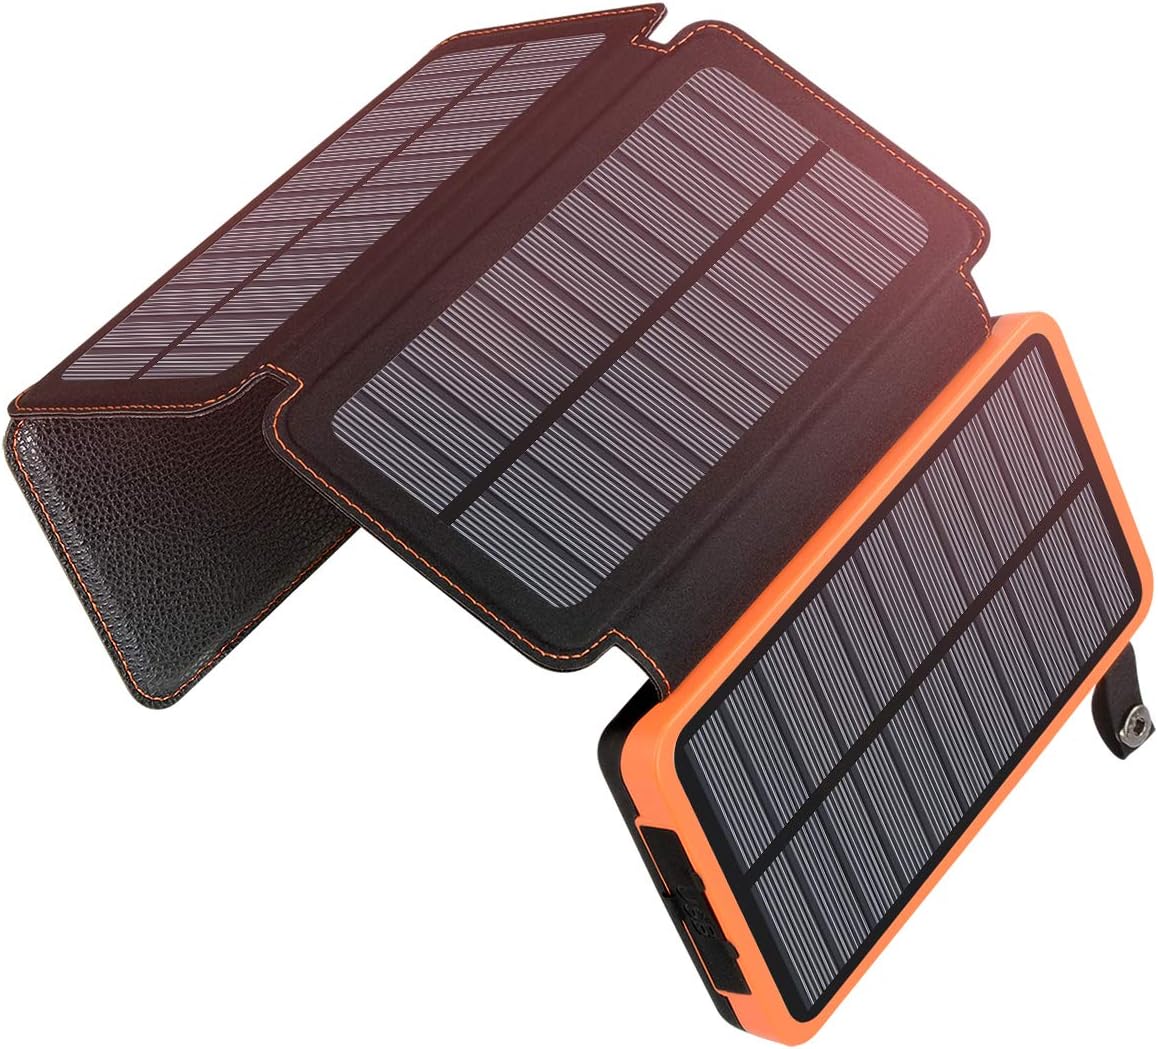 ADDTOP solar power bank 25000mAh with 4 solar panels 2 USB ports